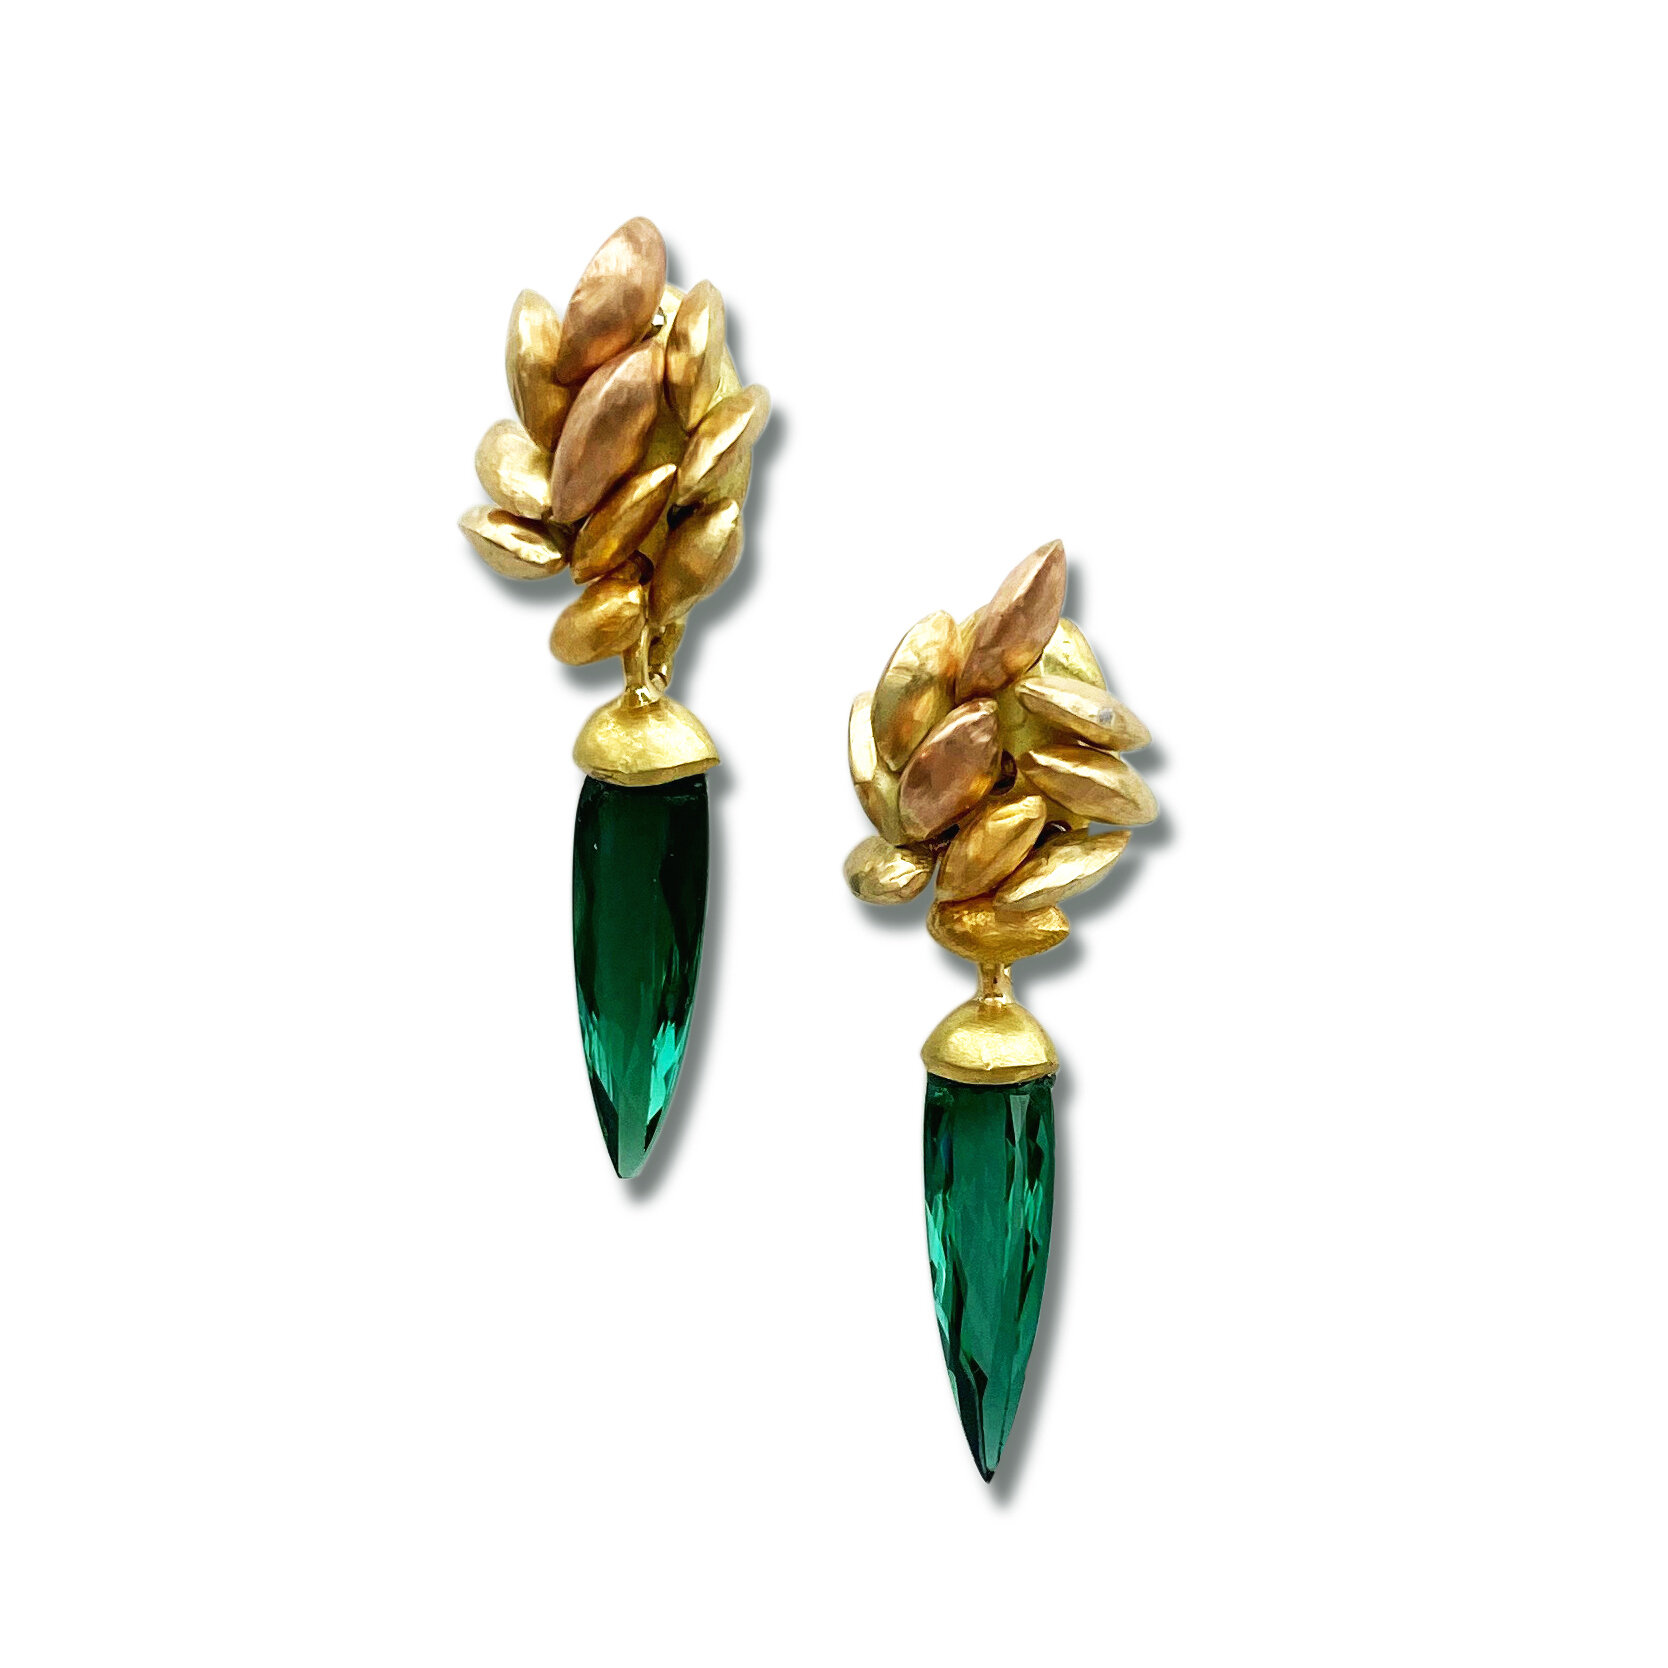 Acini gold earrings with tourmalines